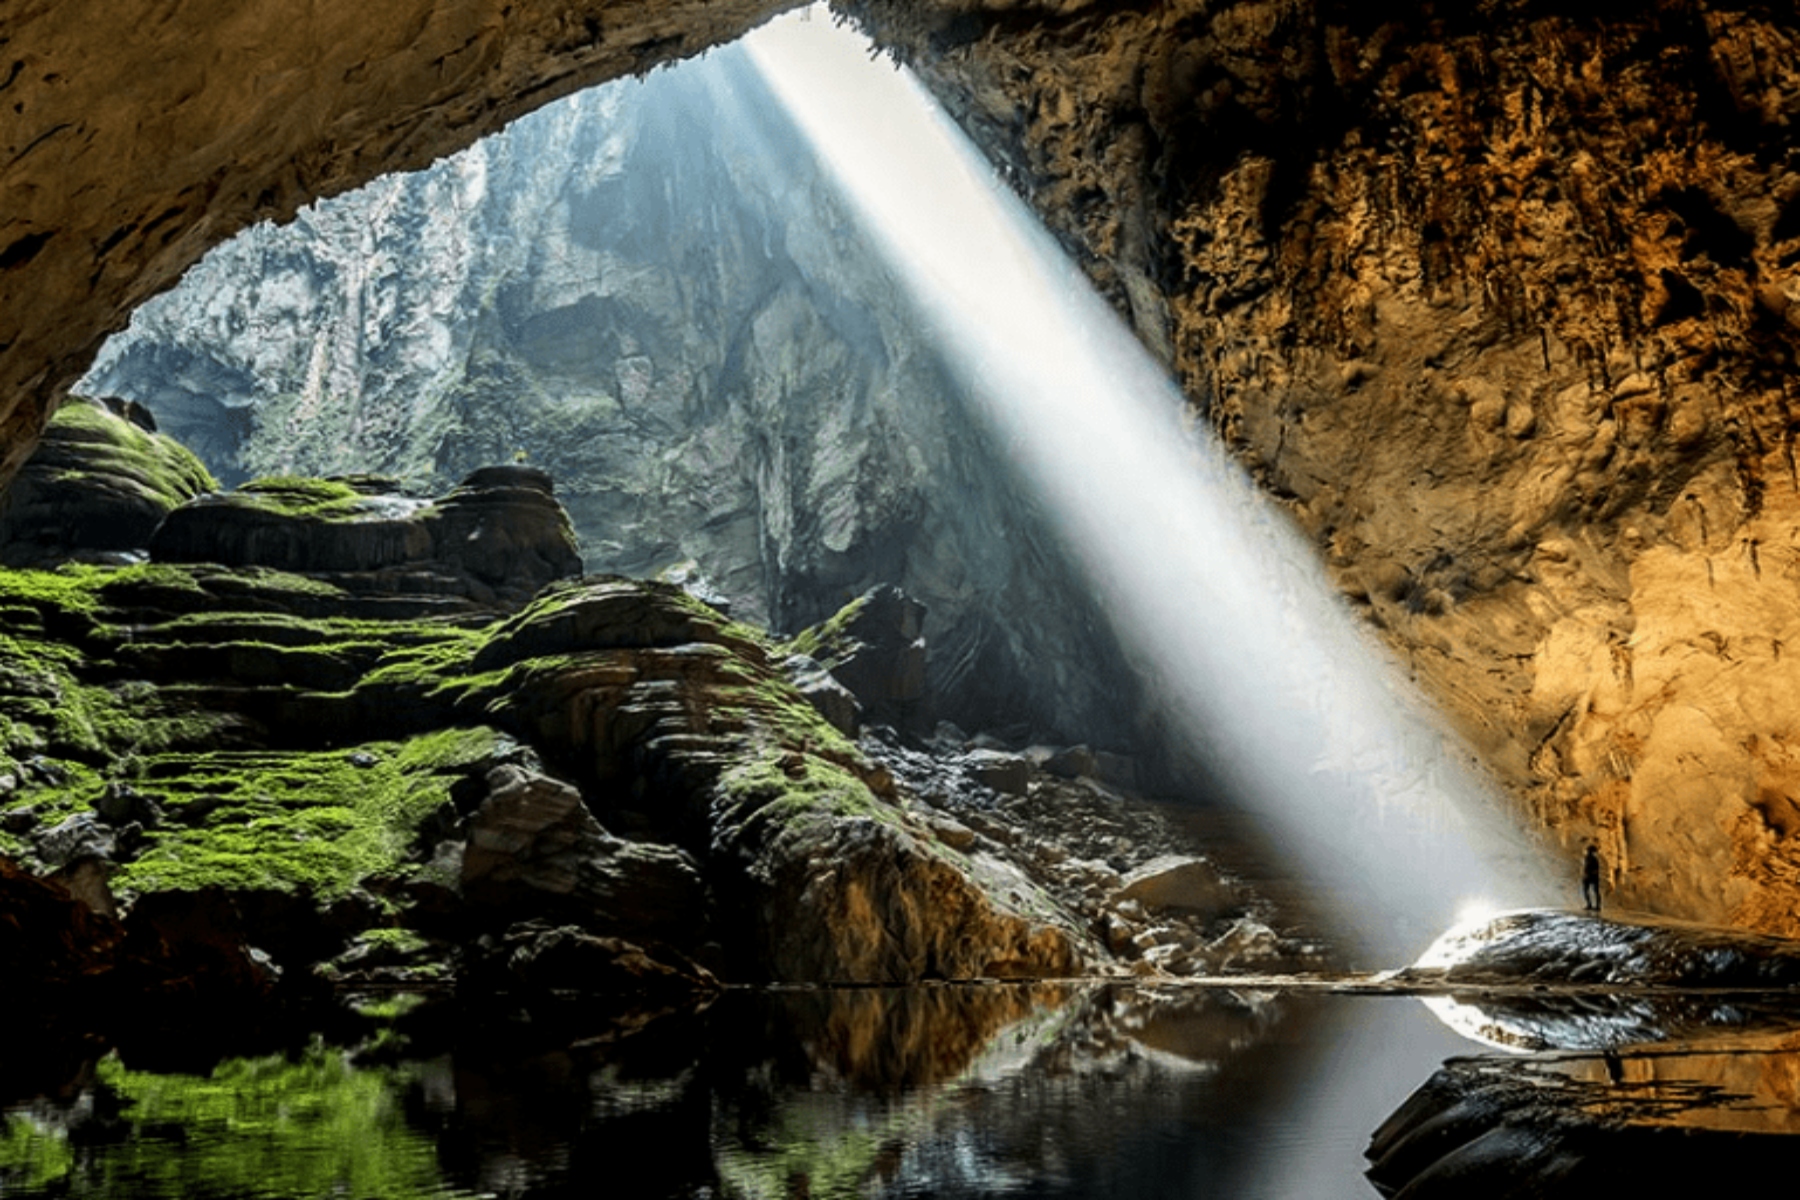 Google Son Doong Cave: Το doodle αφιερωμένο στο μεγαλύτερο σπήλαιο του κόσμου